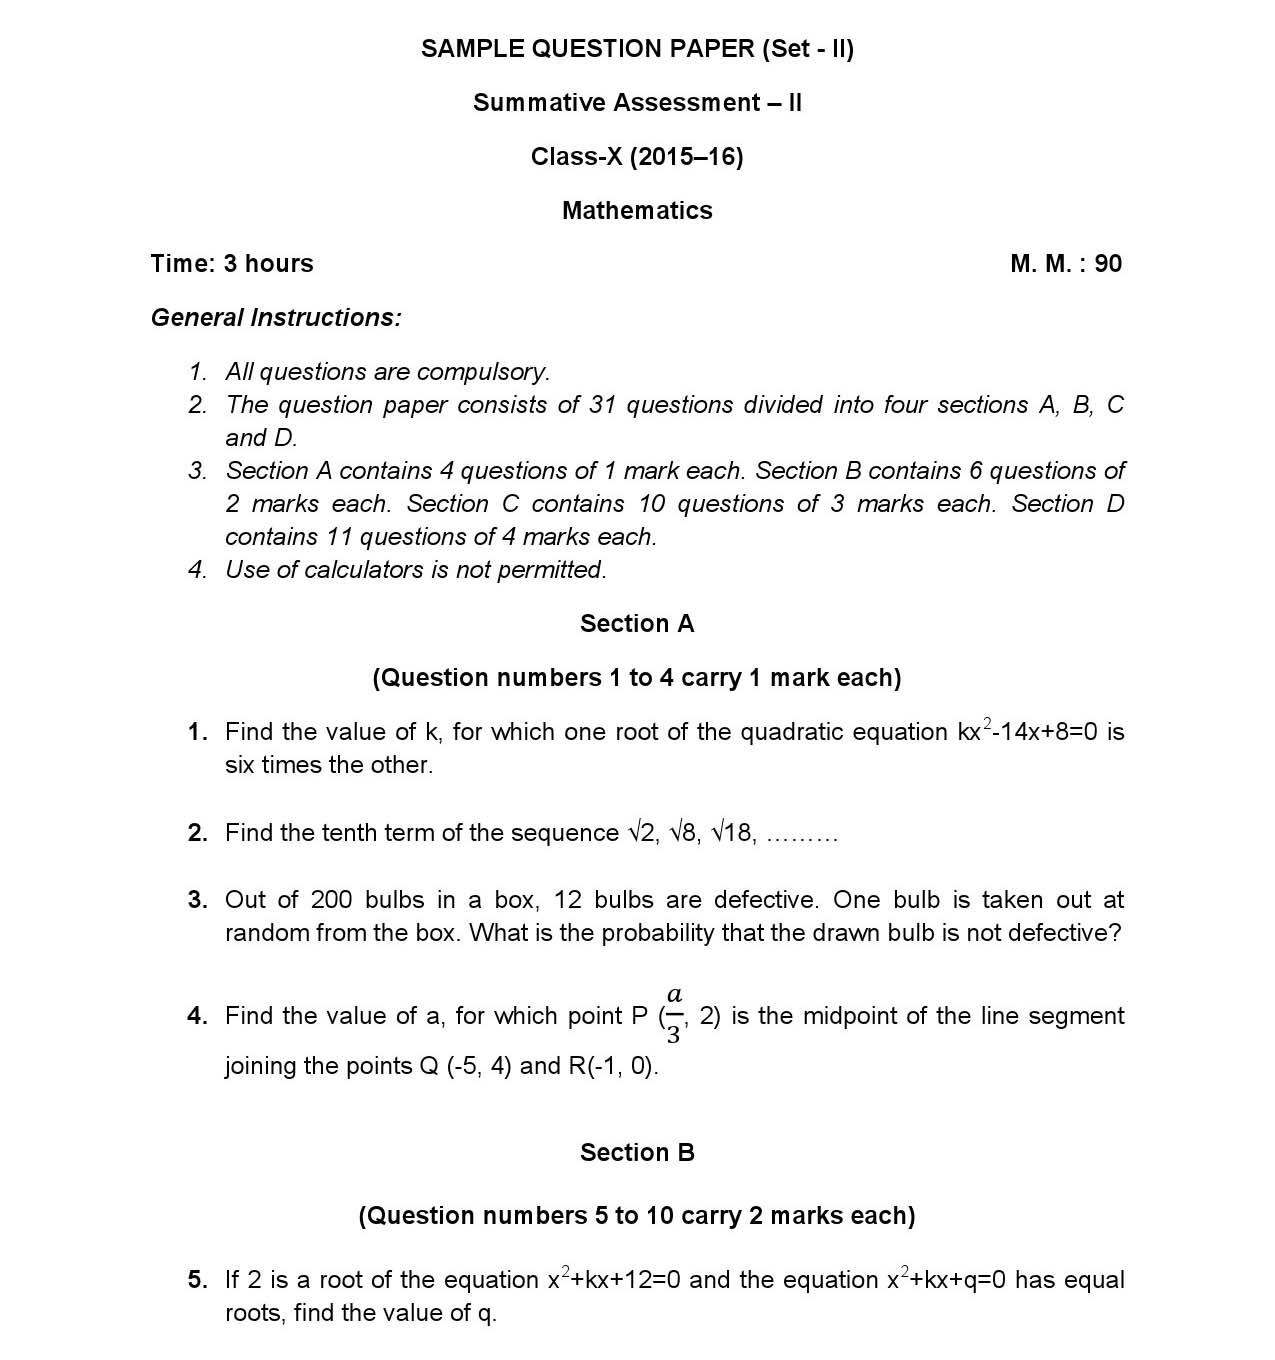 Mathematics CBSE Class X Sample Question Paper 2015 16 - Image 1